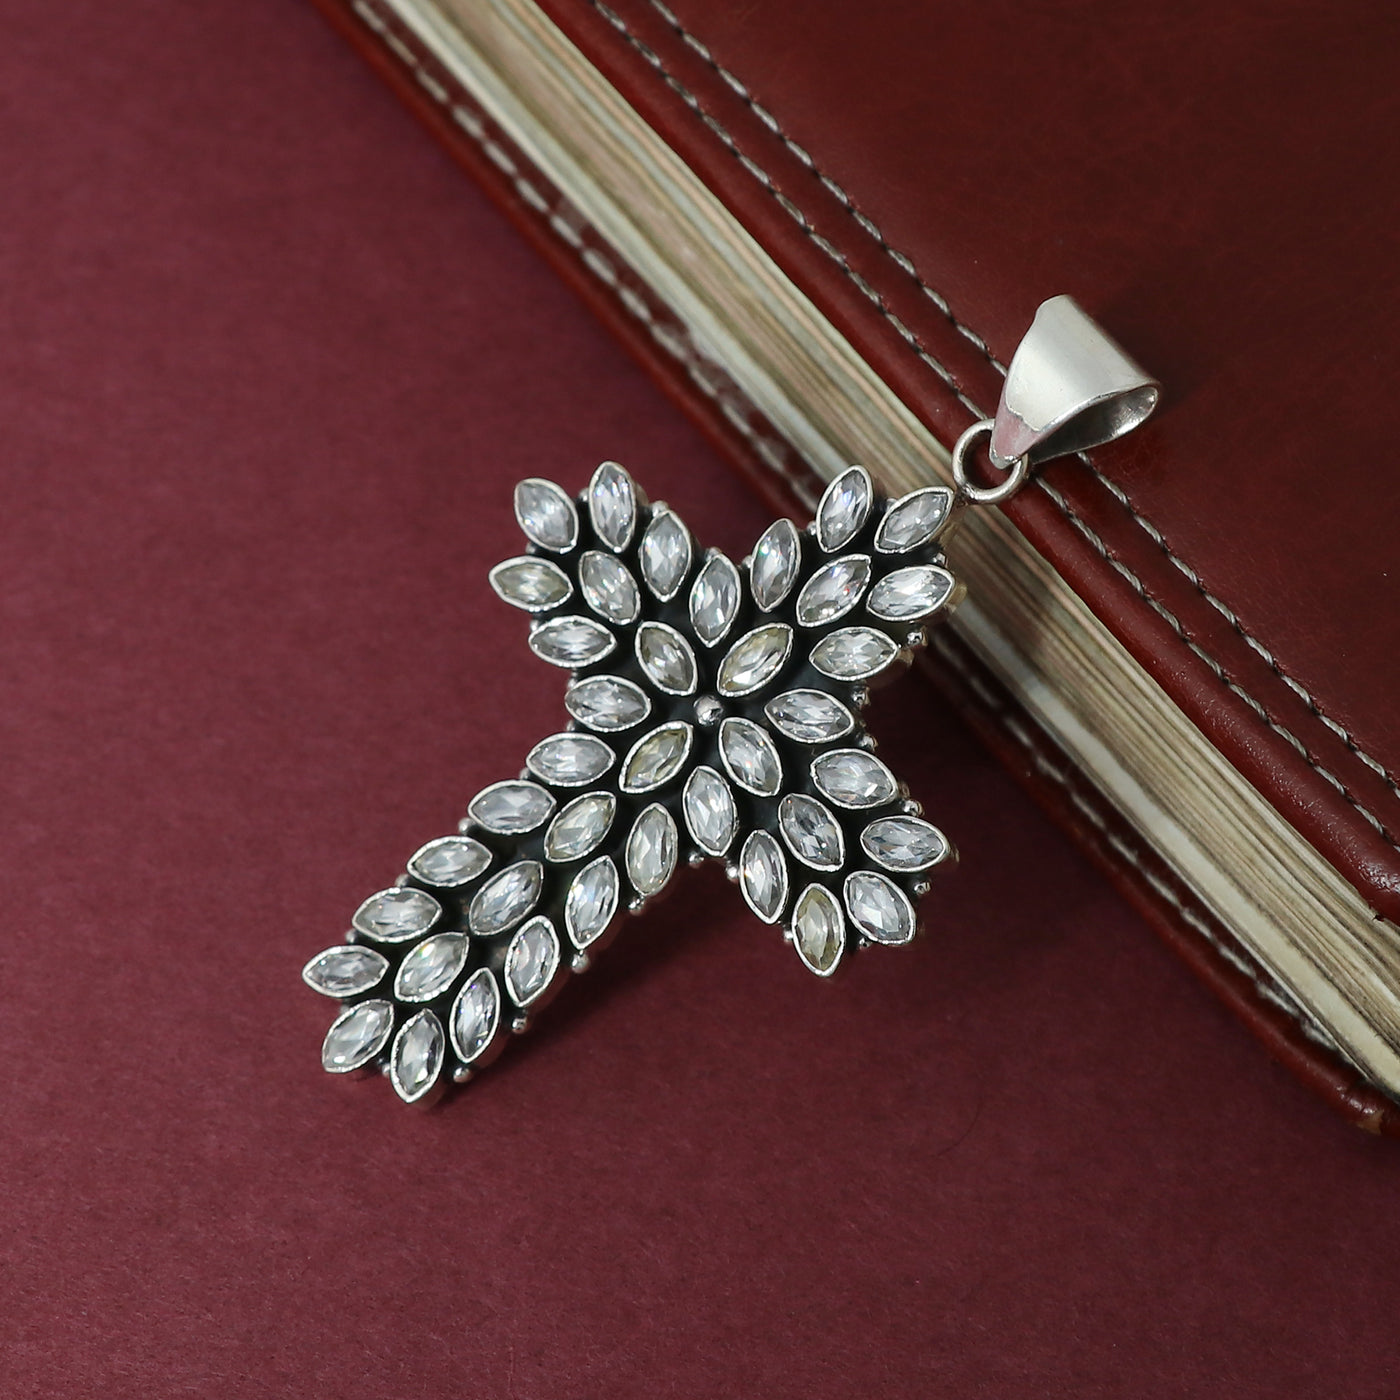 Sterling Silver Cubic Zirconia Gemstone Cross Pendant